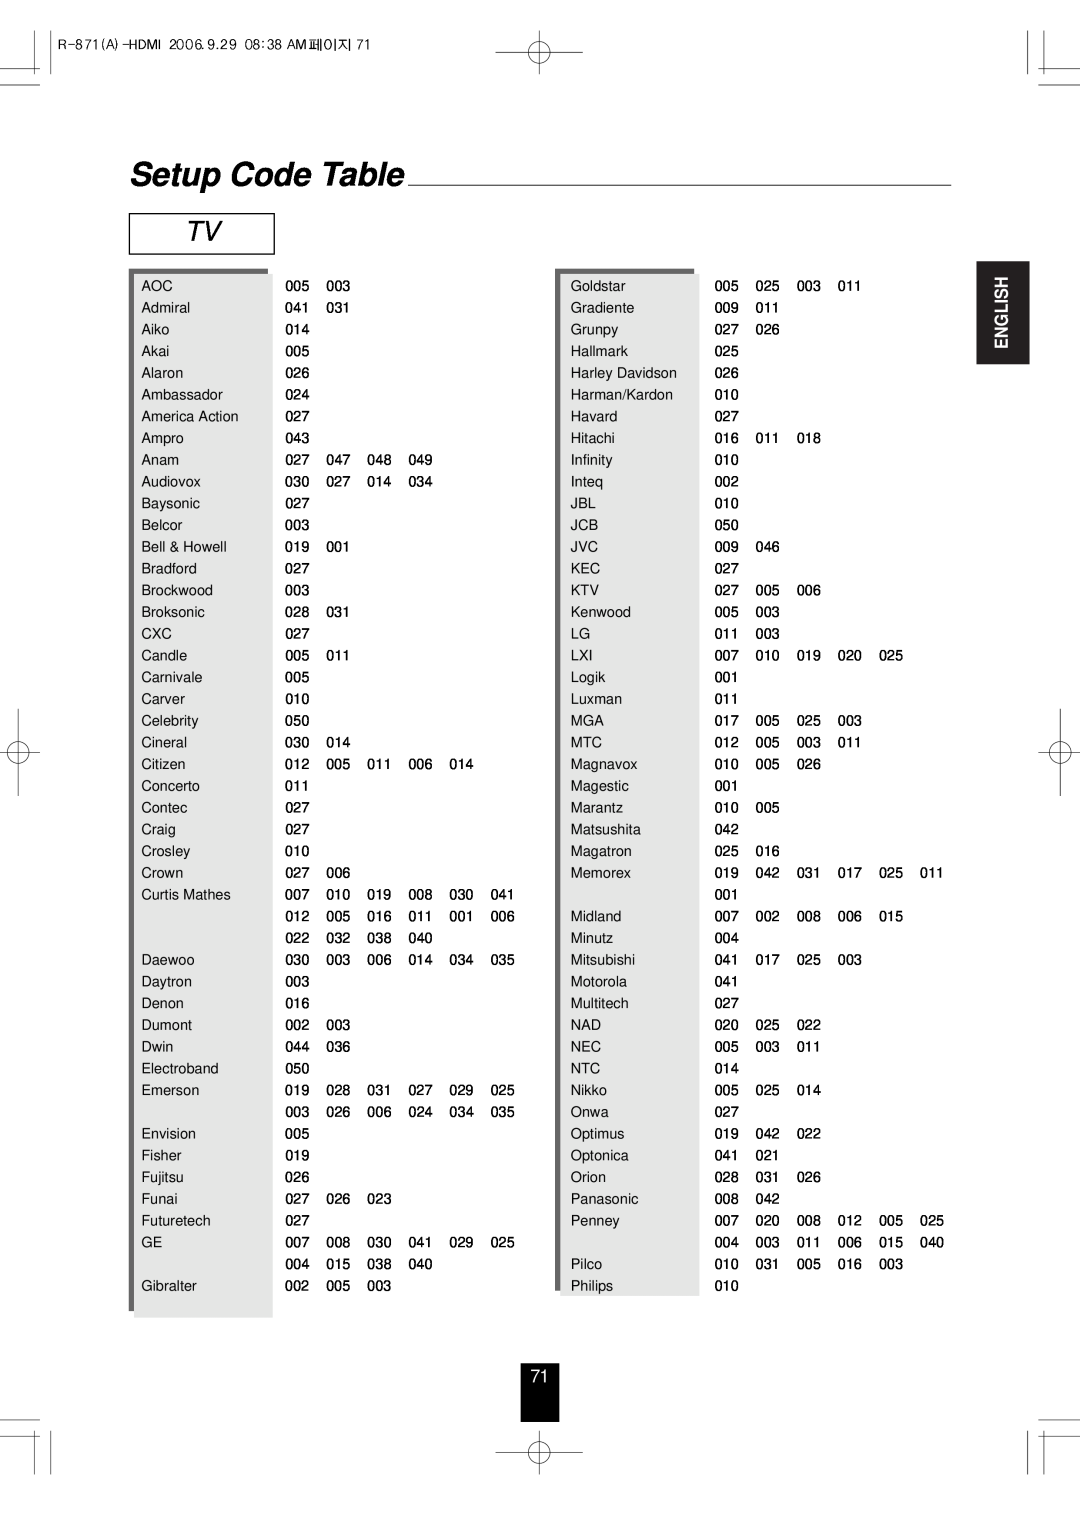 Sherwood R-871 manual Setup Code Table, English 